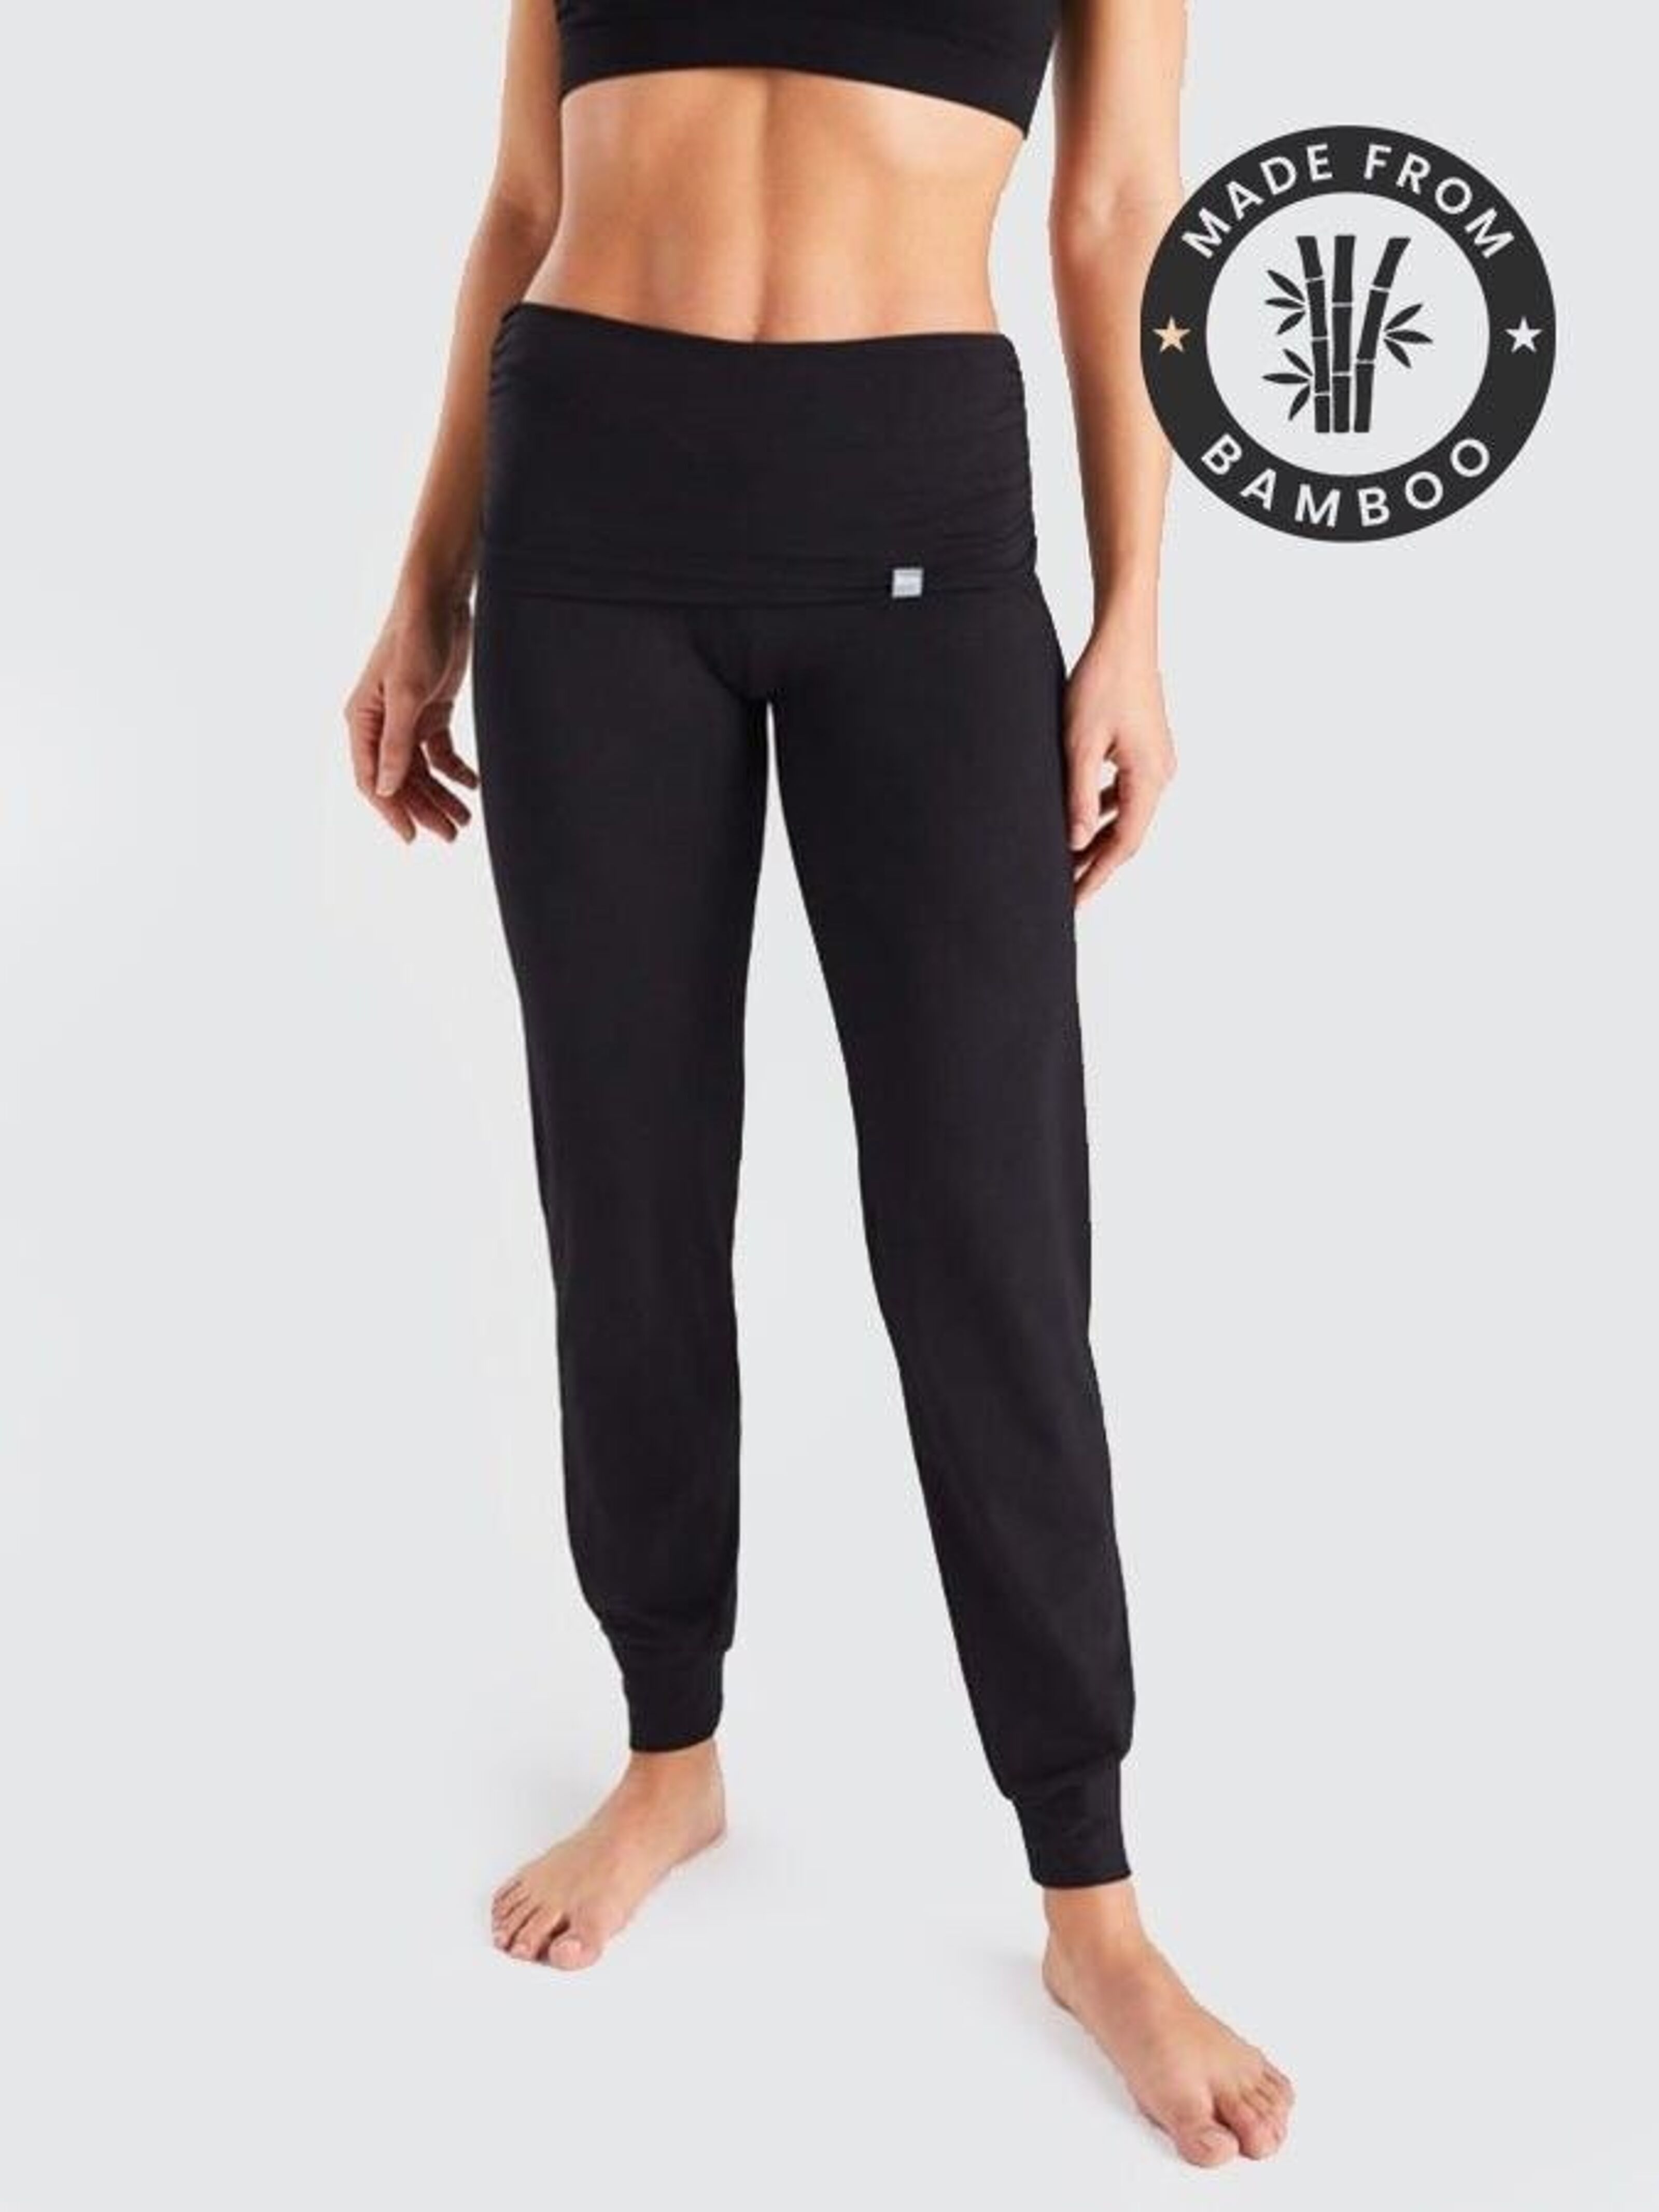 Buy wholesale BAM - Poise Bamboo Women's Yoga Pants - Black